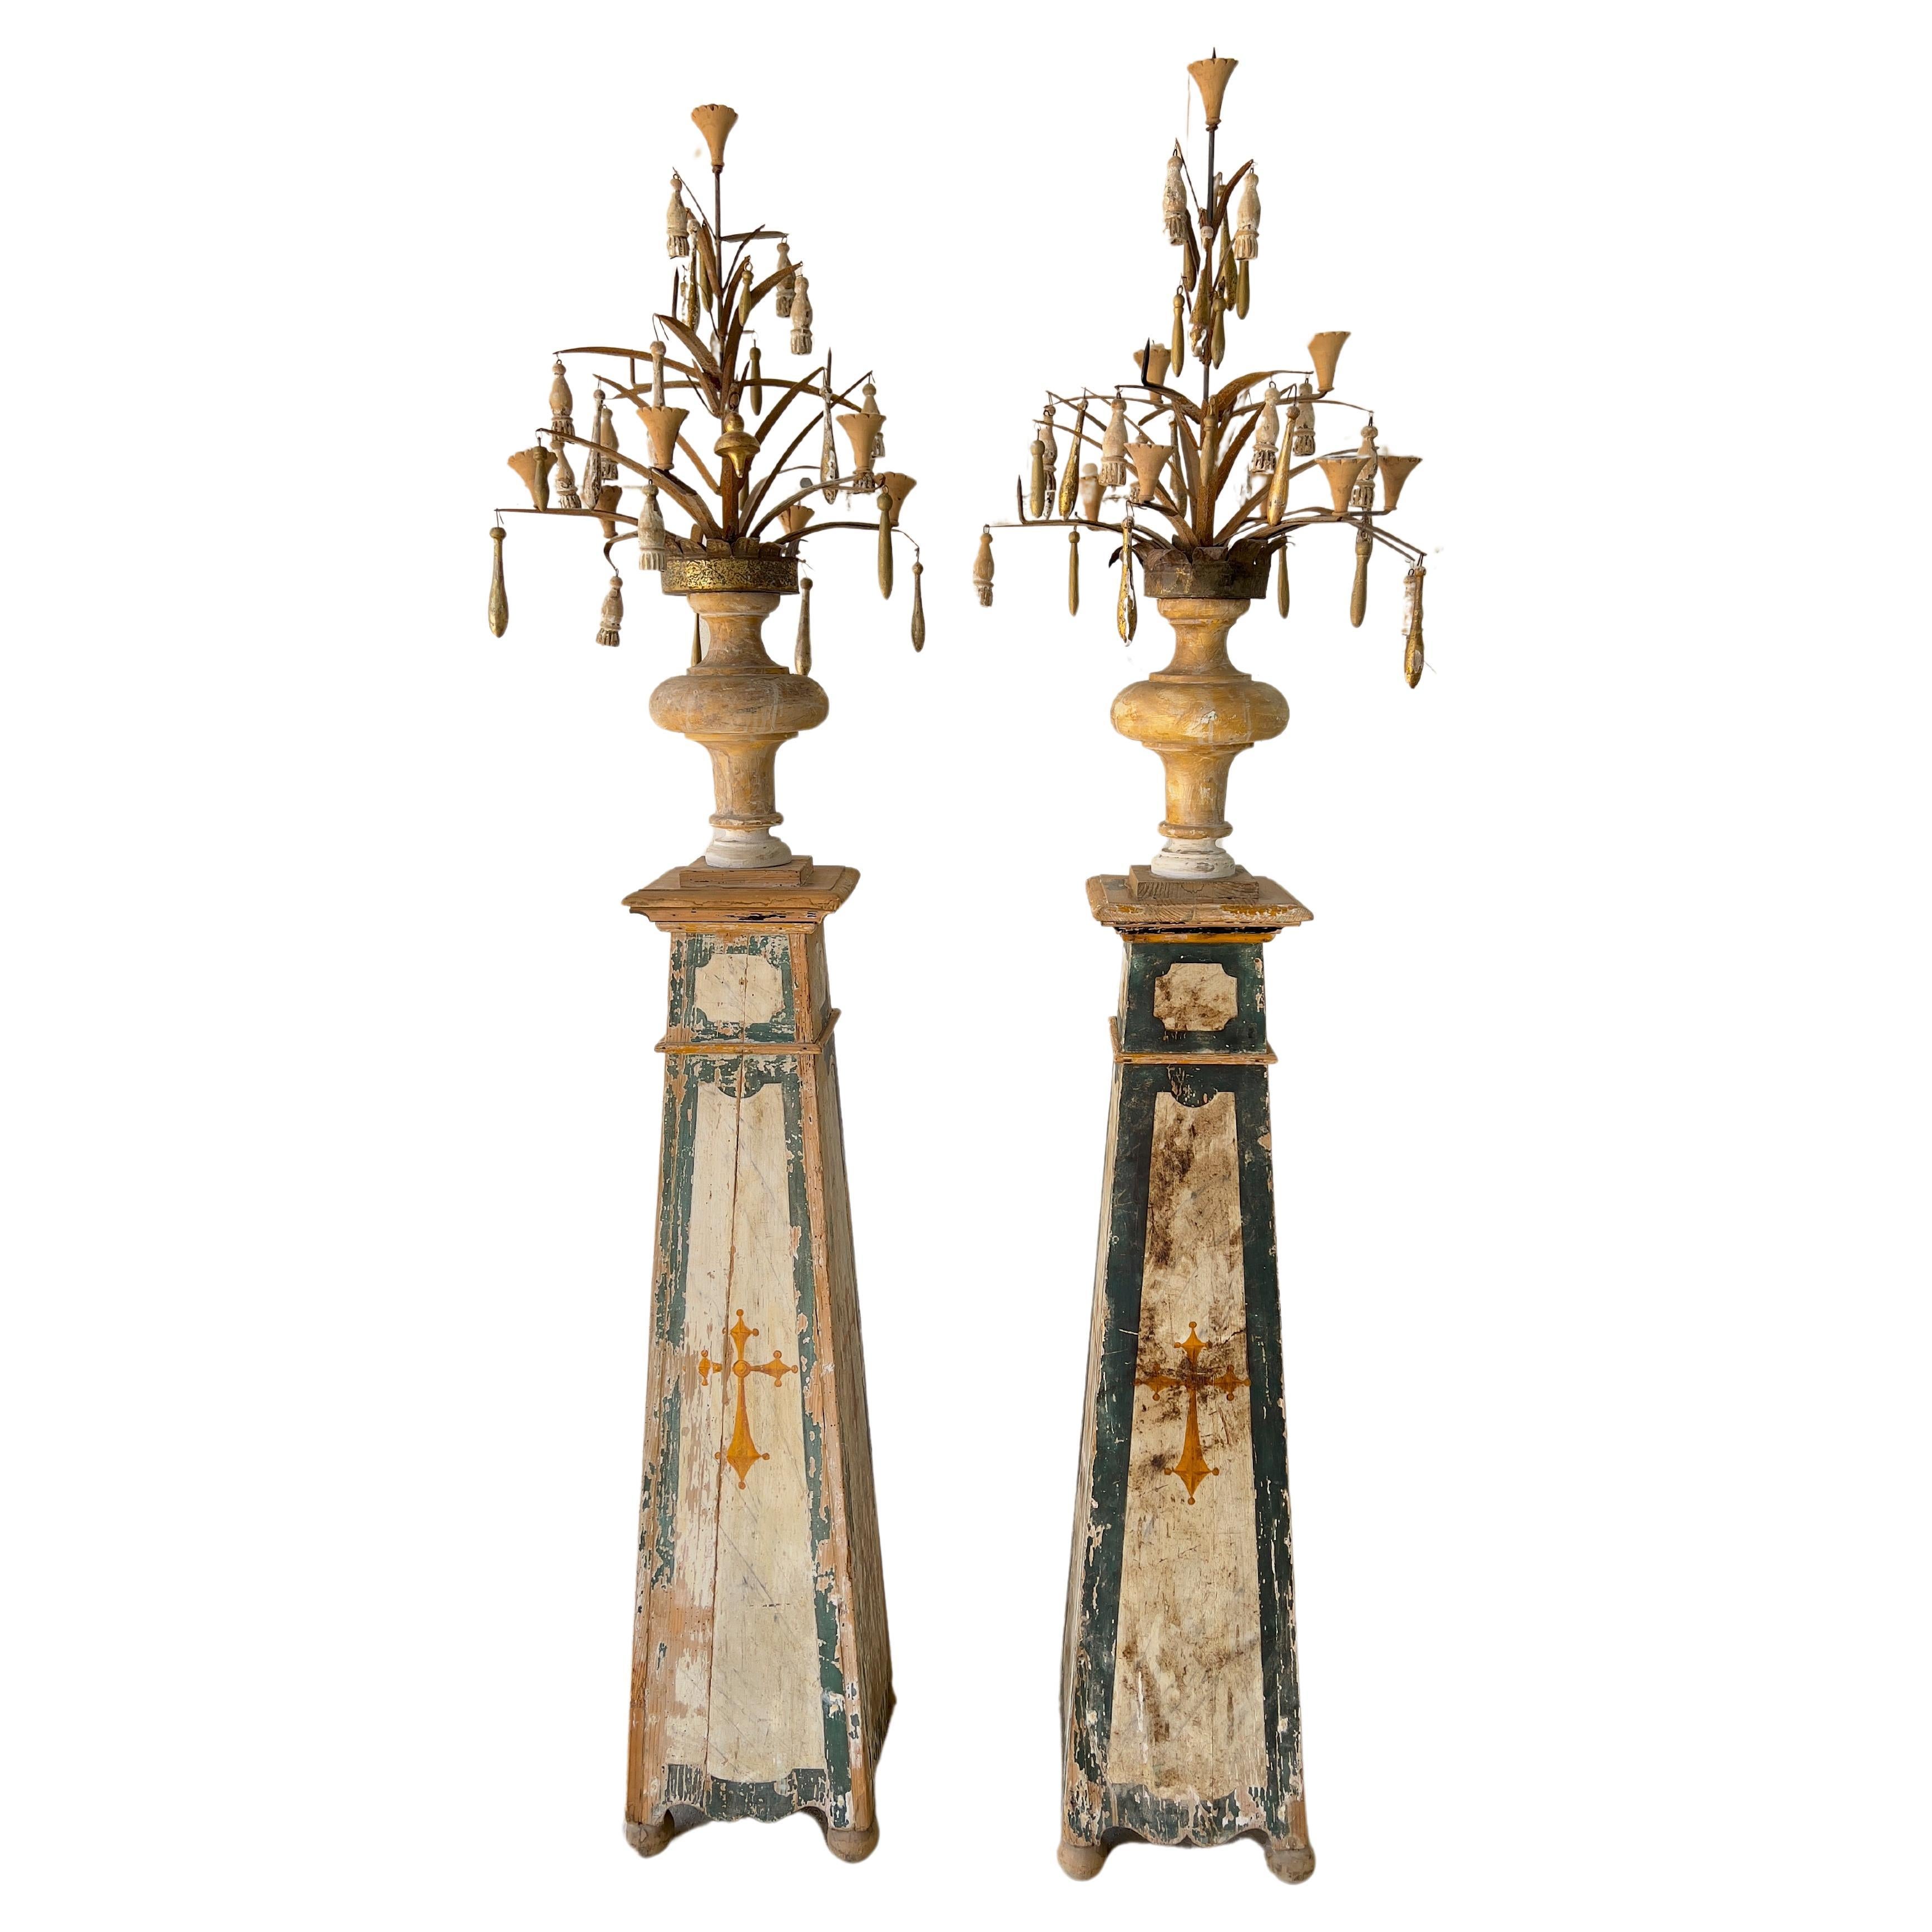 18th Century Italian pair of torcheres